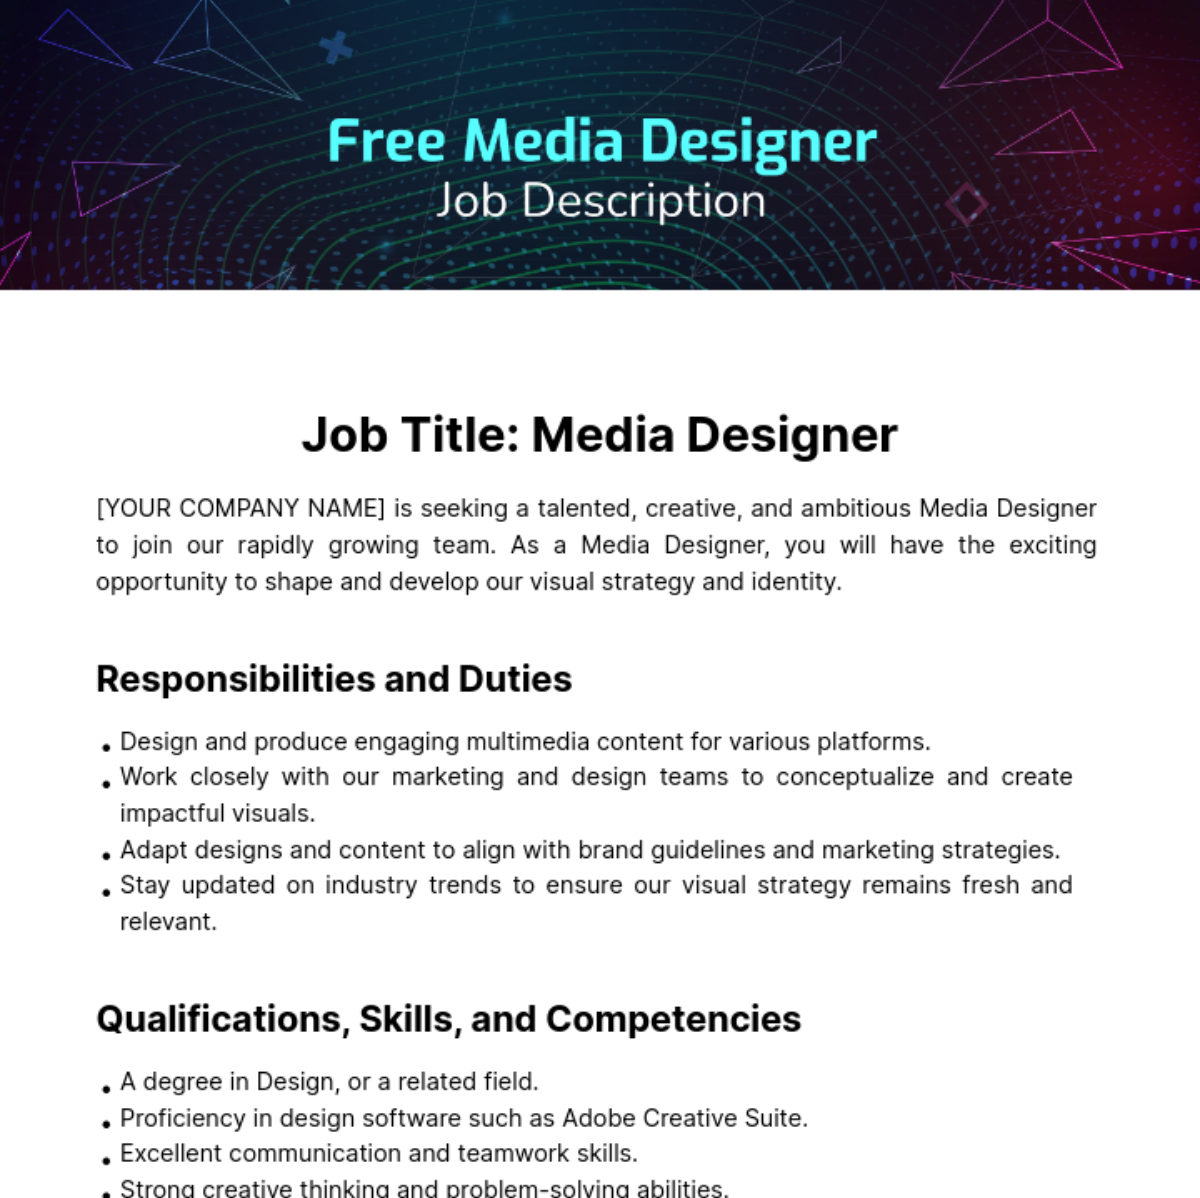 Free Media Designer Job Description Template